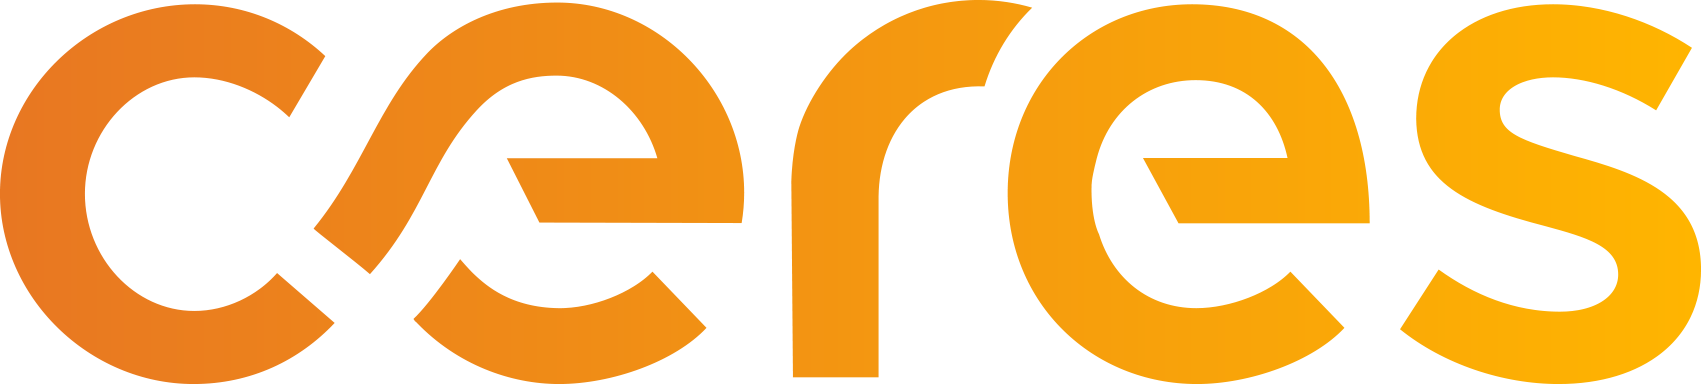 ceres power logo